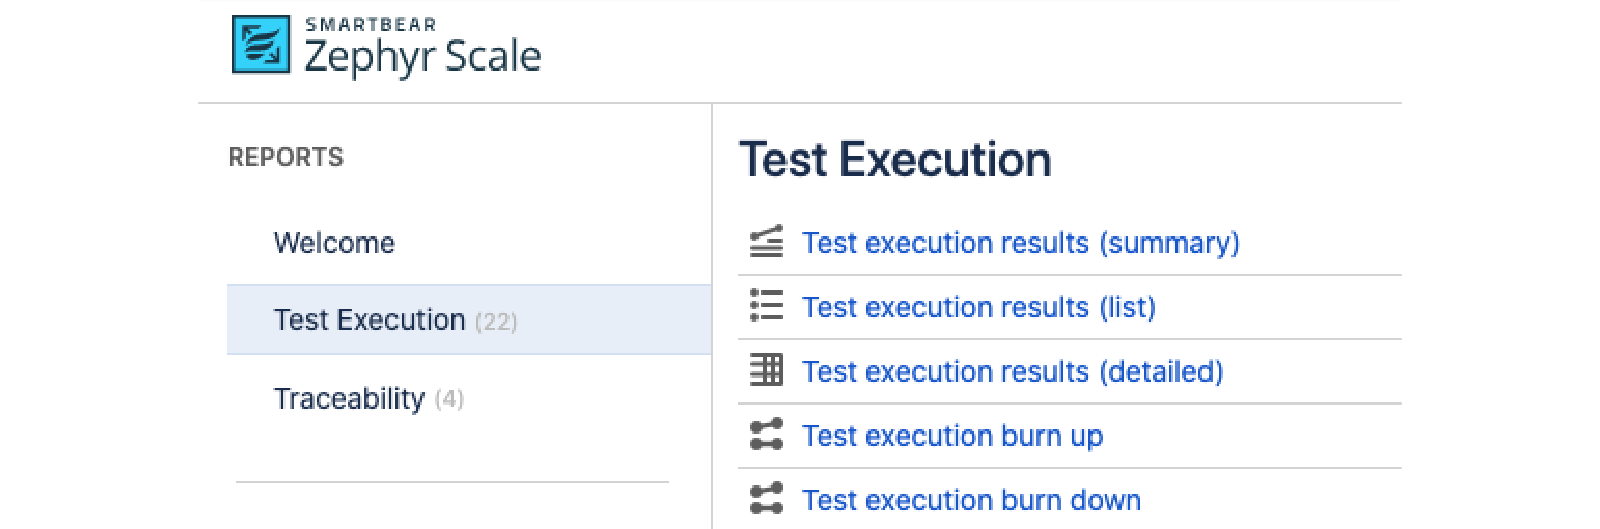 Onglet Test Execution (Exécution de tests) dans Zephyr Scale